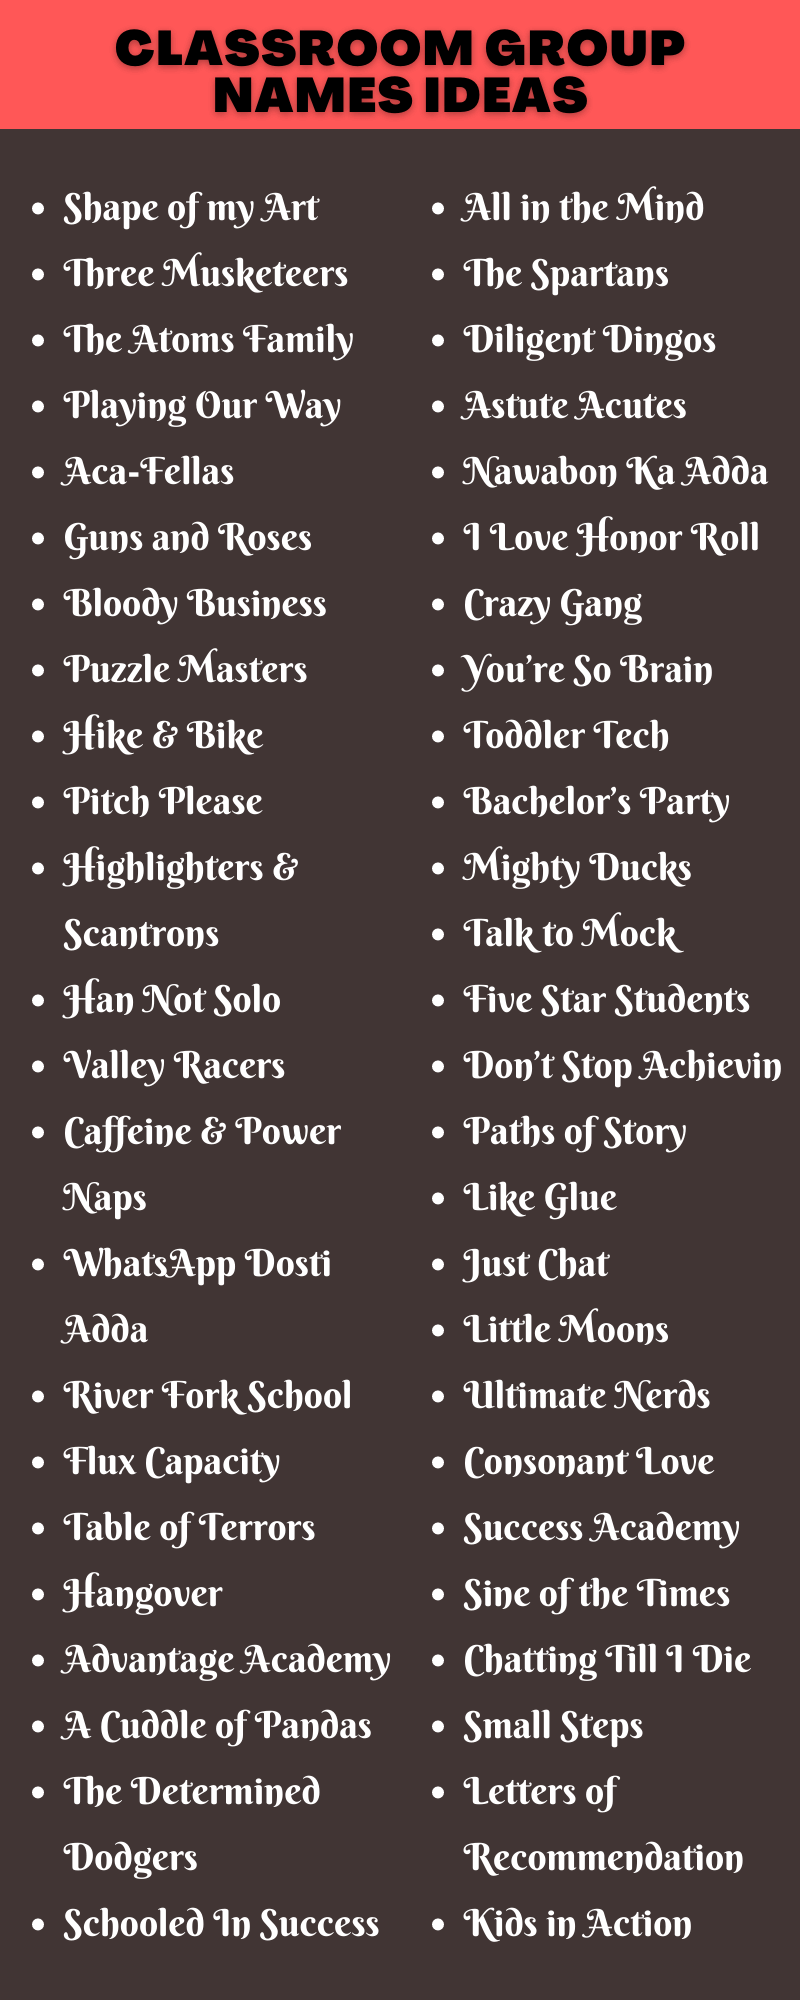 Classroom Group Names Ideas (1)